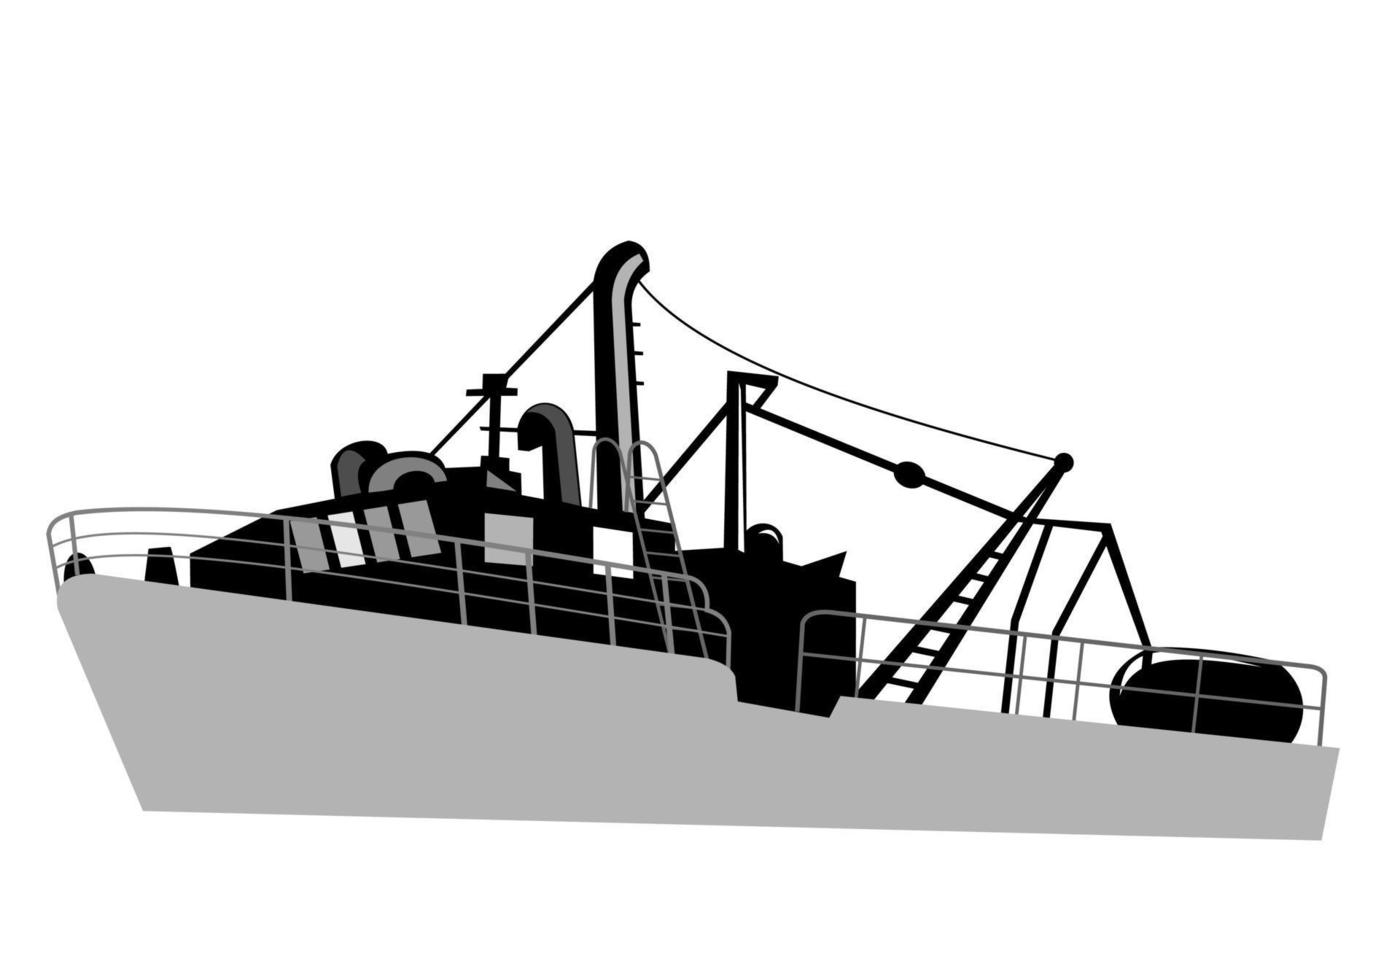 navio de pesca vintage barco de pesca comercial ou estilo retro isolado do lado da traineira vetor